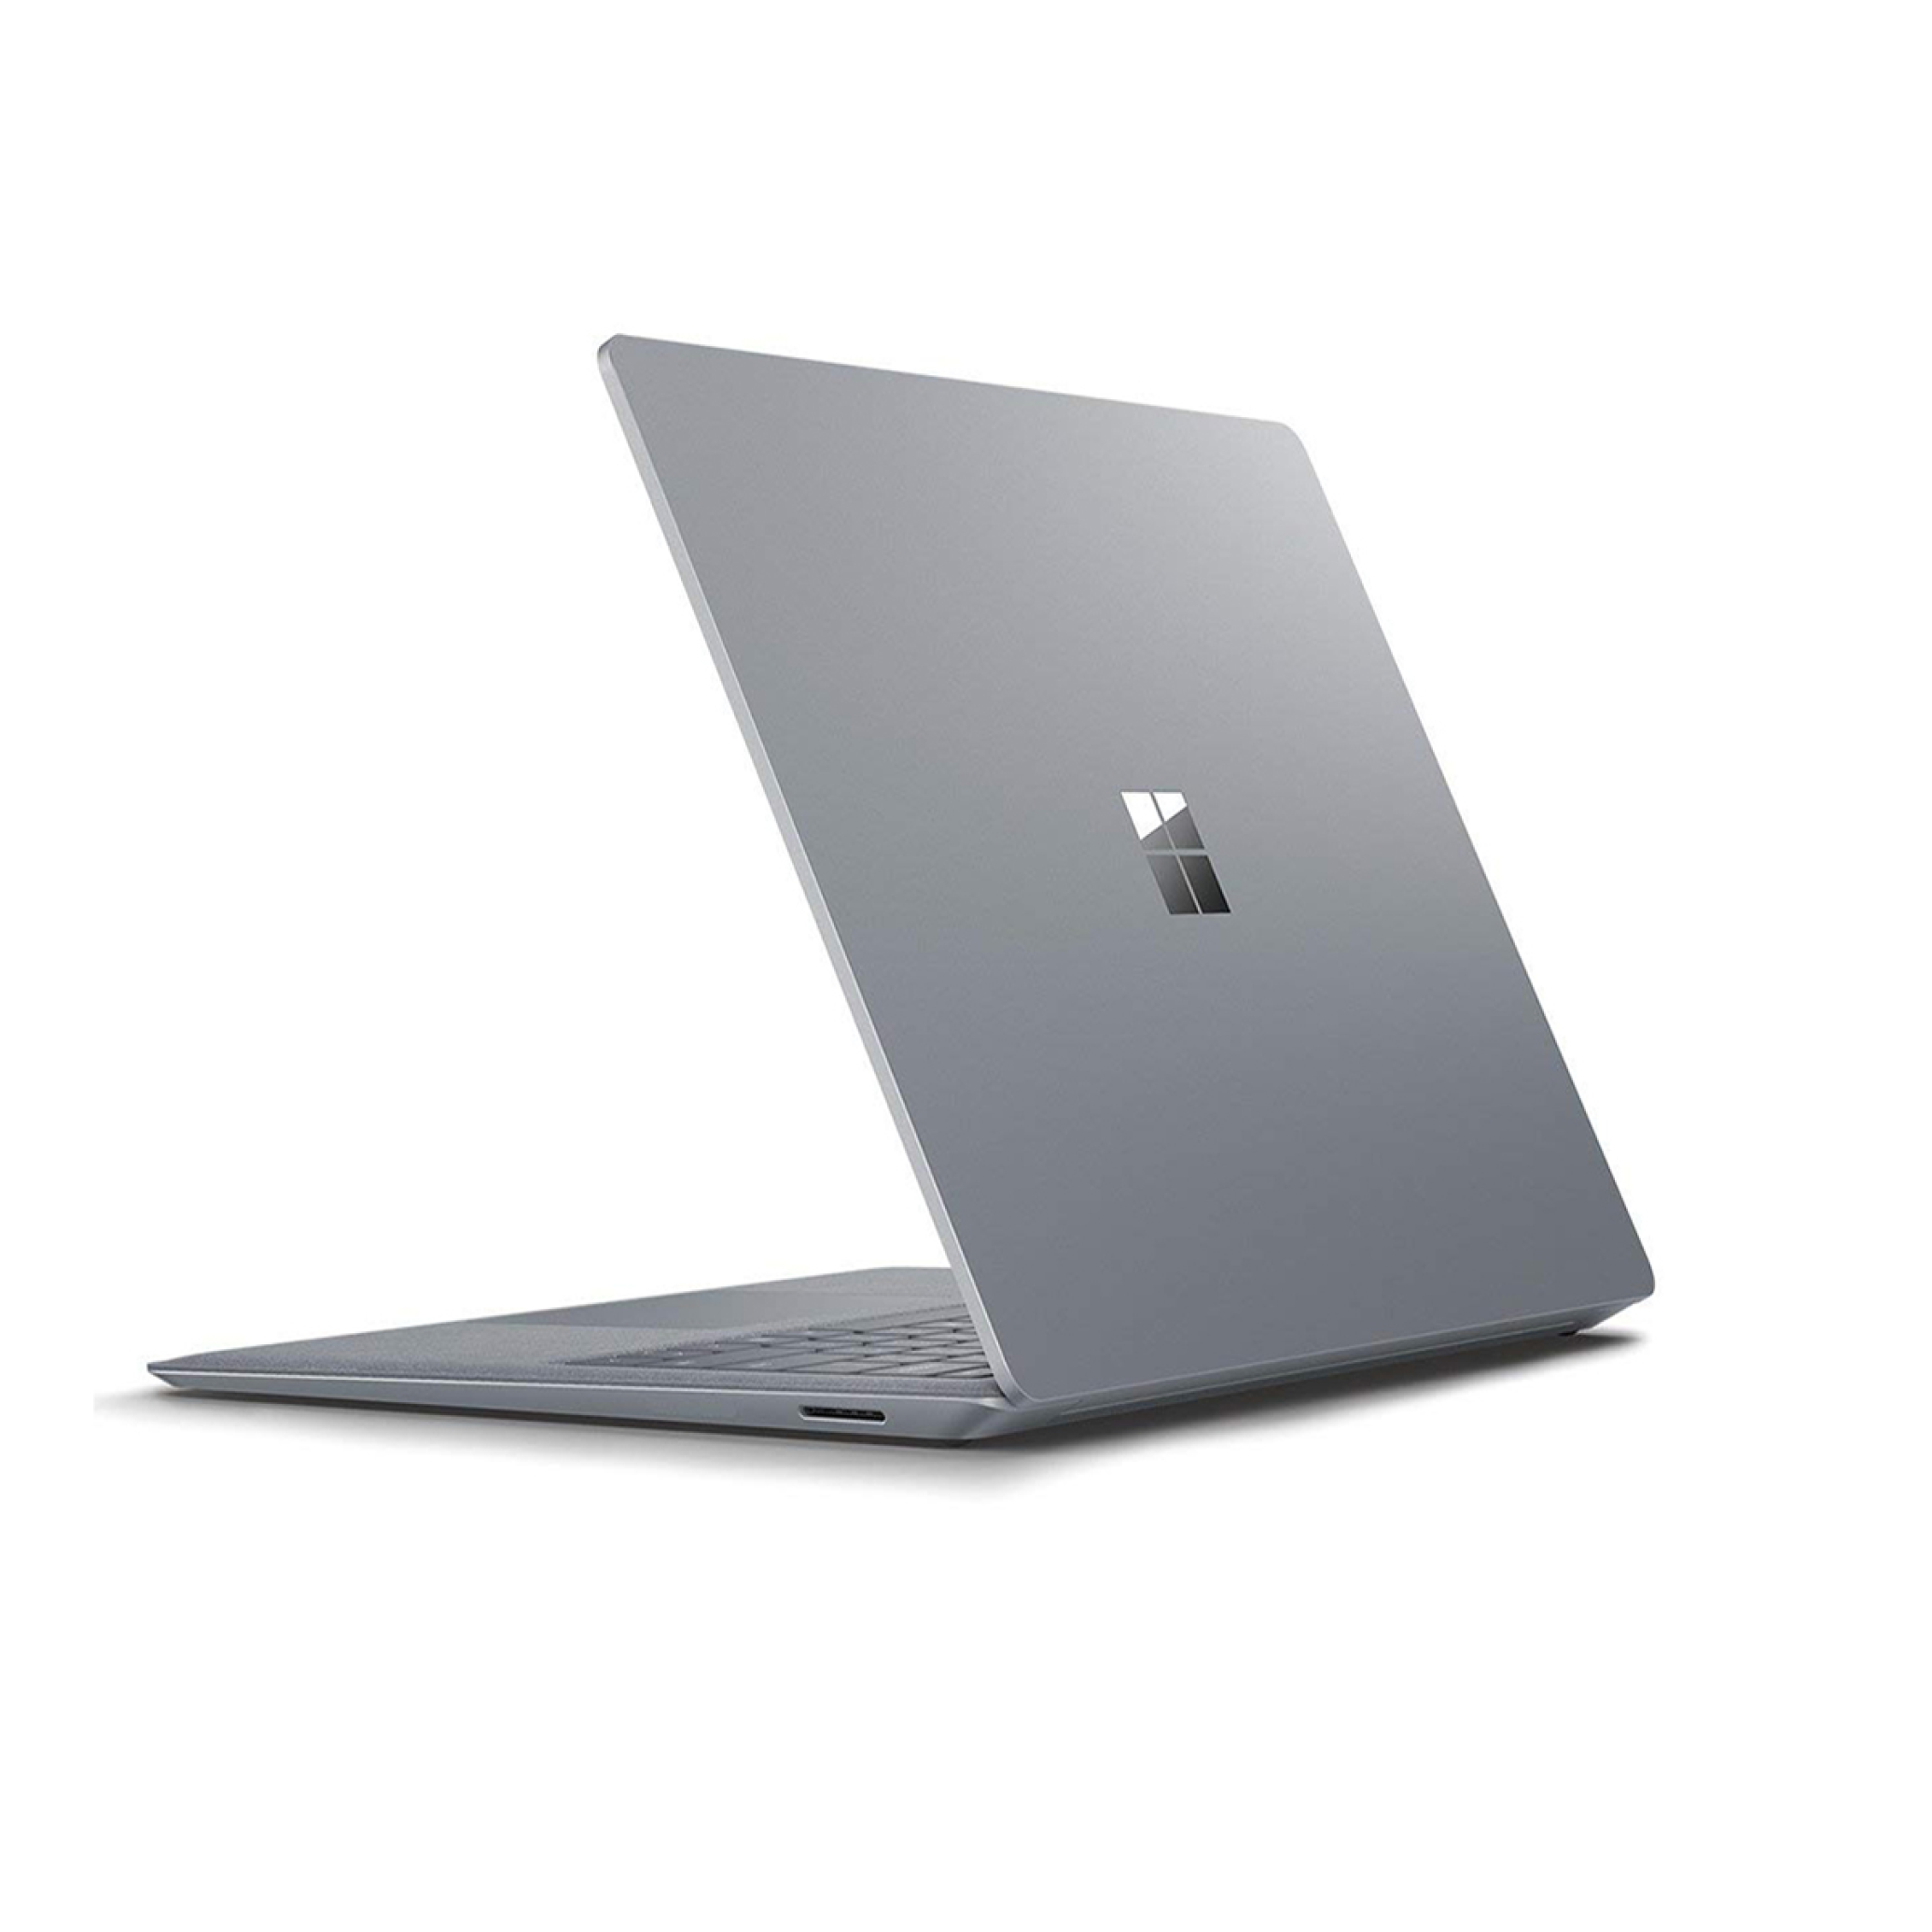  Microsoft Surface Laptop 1 قیمت مشخصات و خرید لپ تاپ یا تبلت آکبند سرفیس لپ تاپ 1 